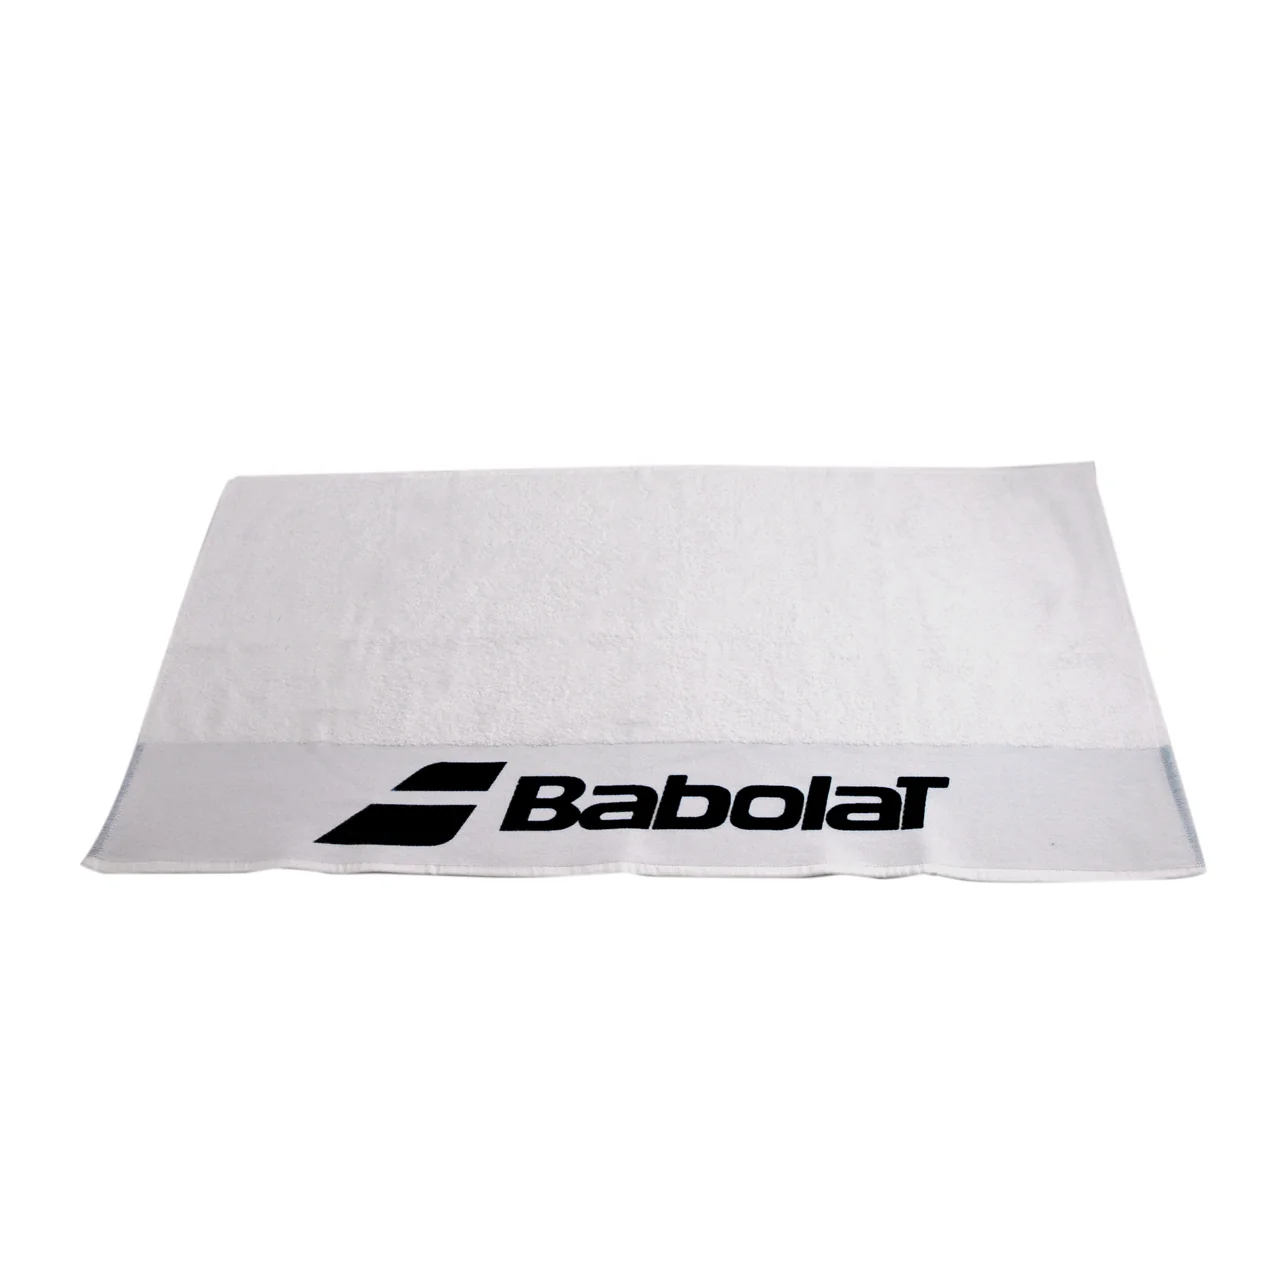 Babolat Towel 100*50cm